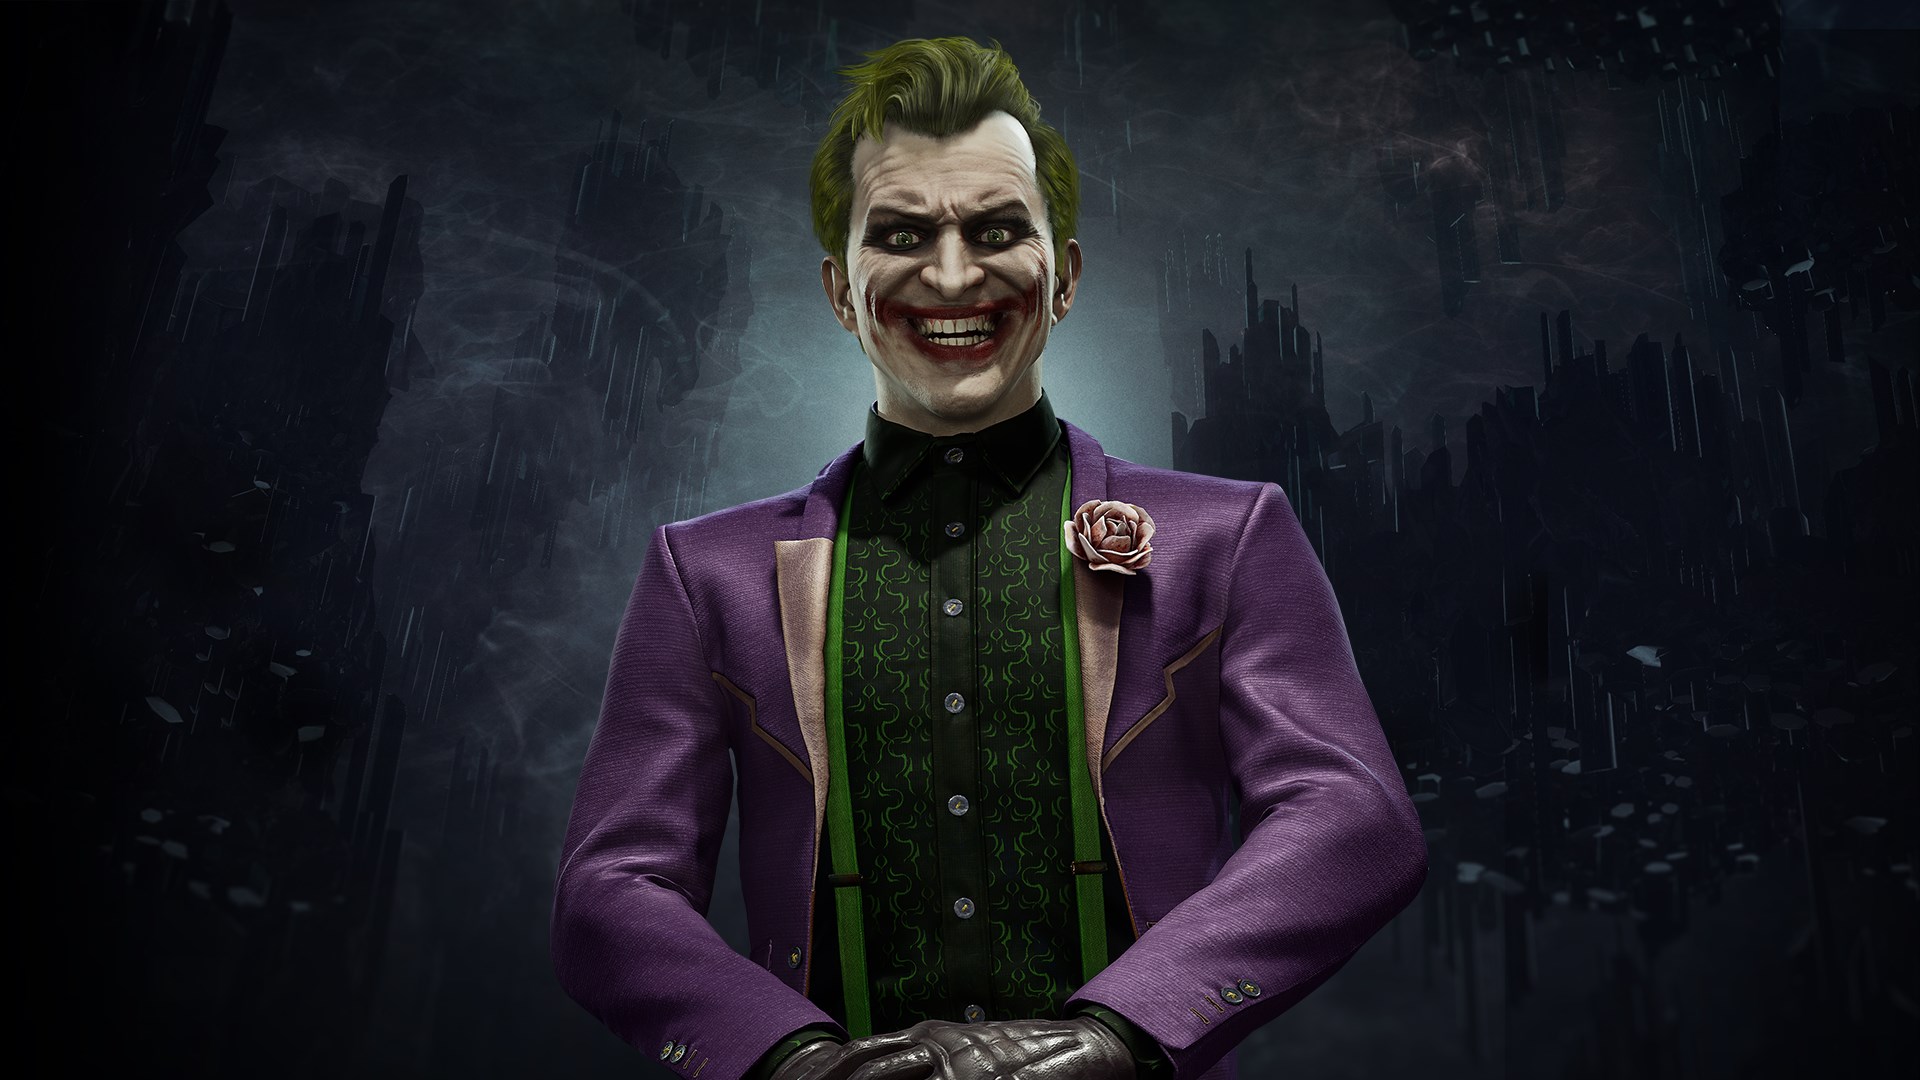 Joker instal the new version for ipod